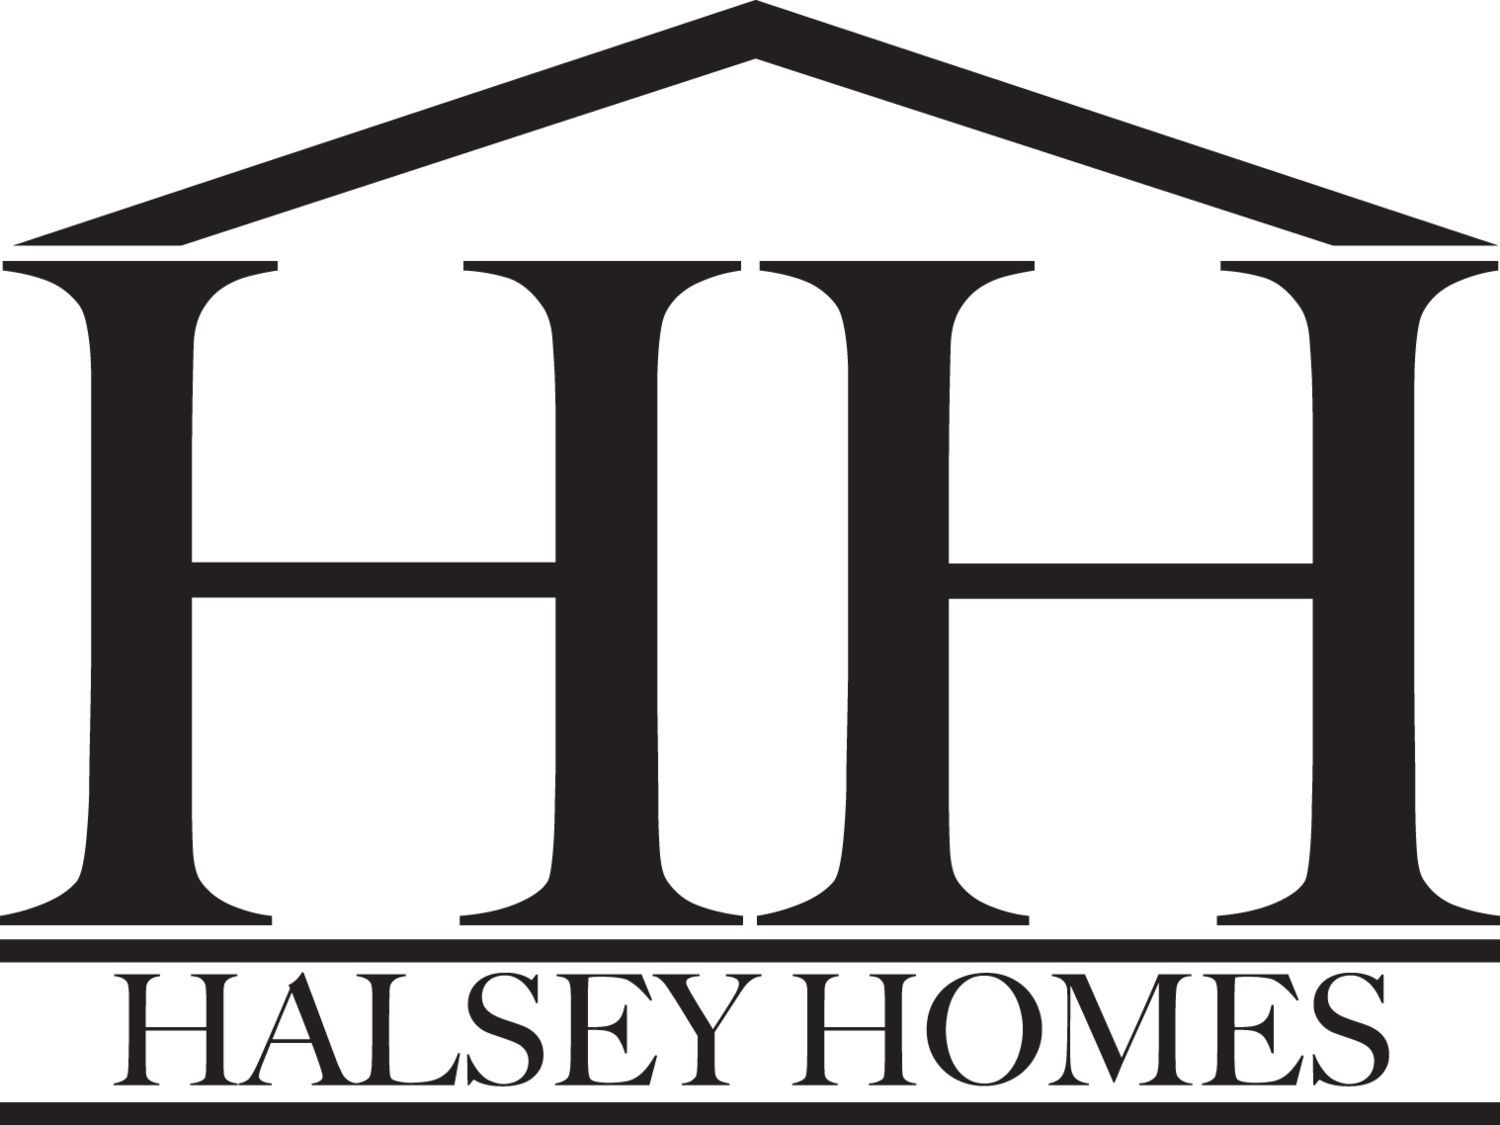 Halsey Homes,22551